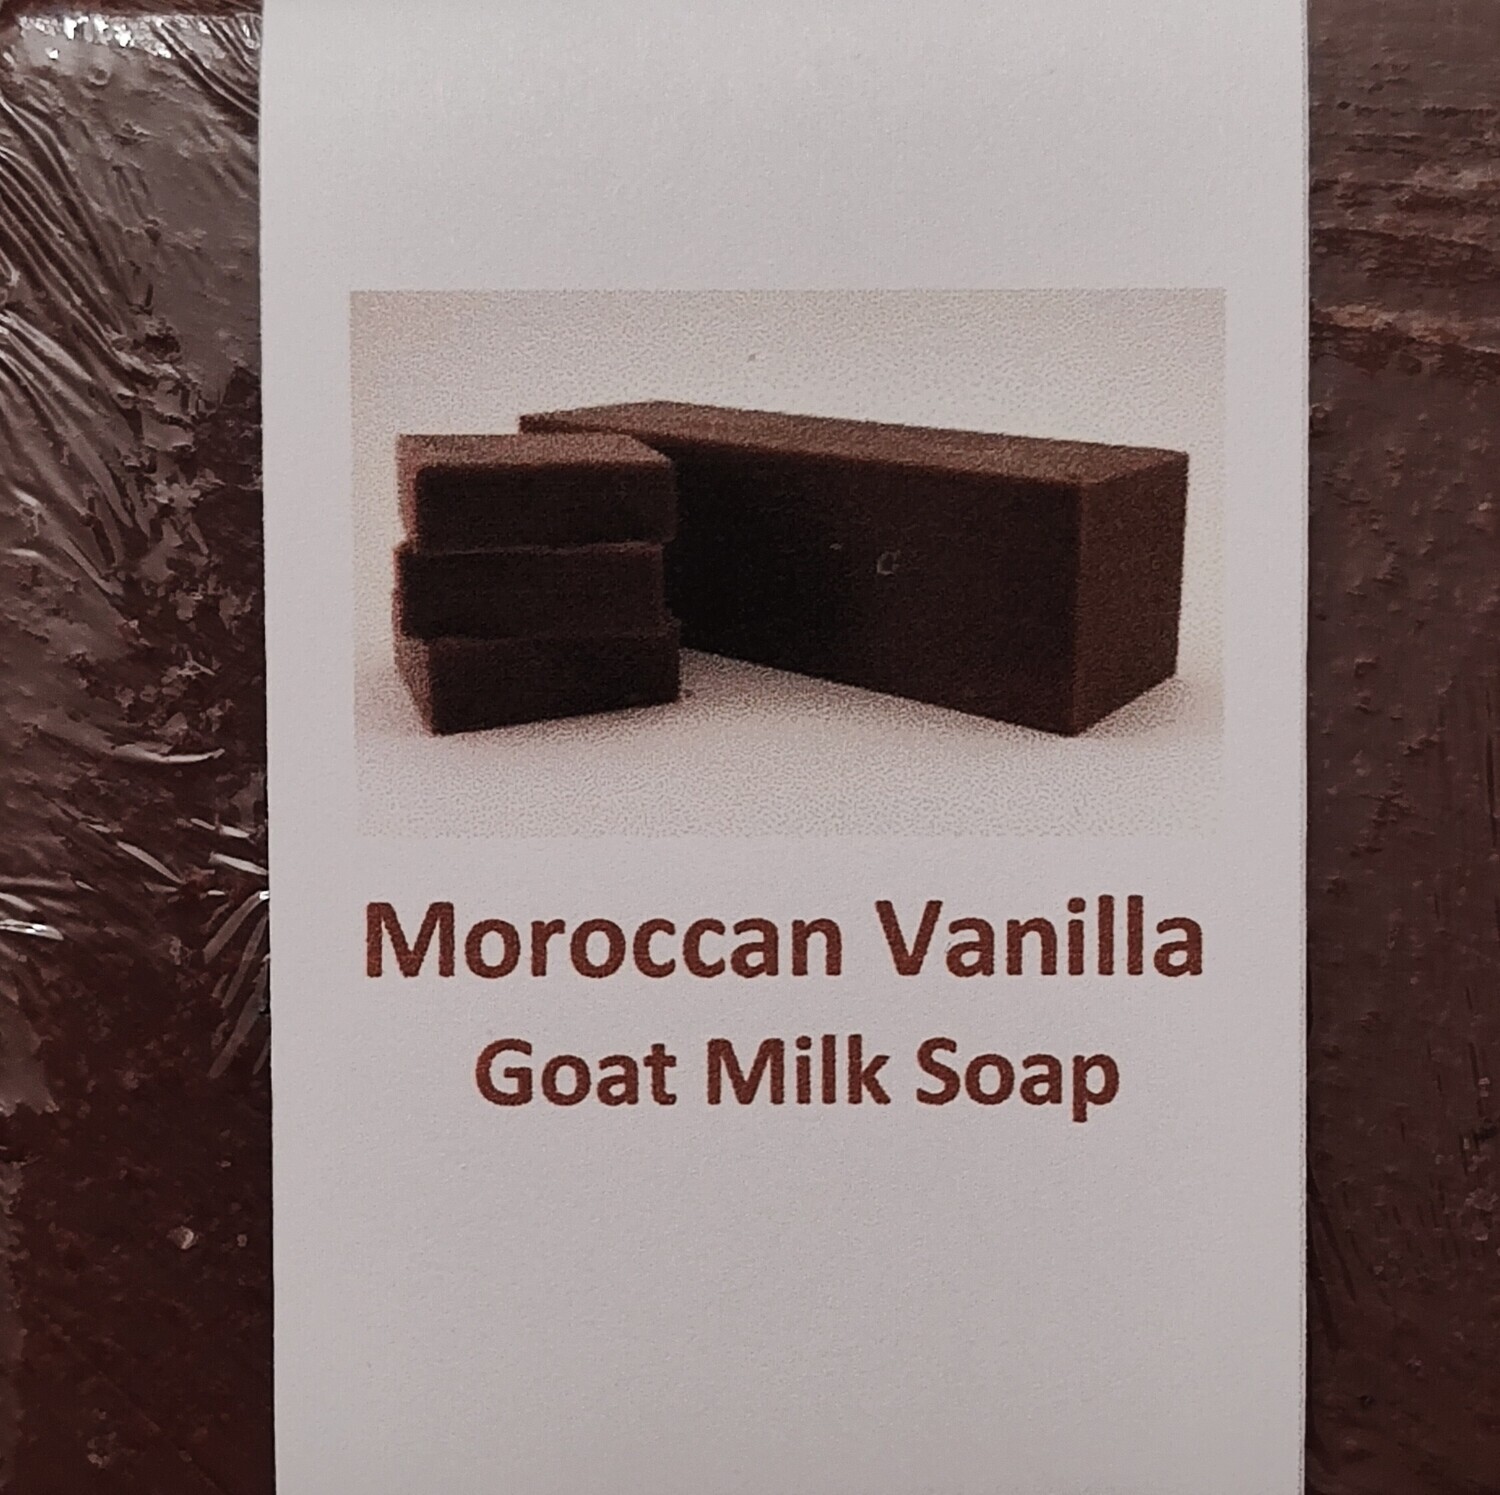 Moroccan Vanilla Goat Milk